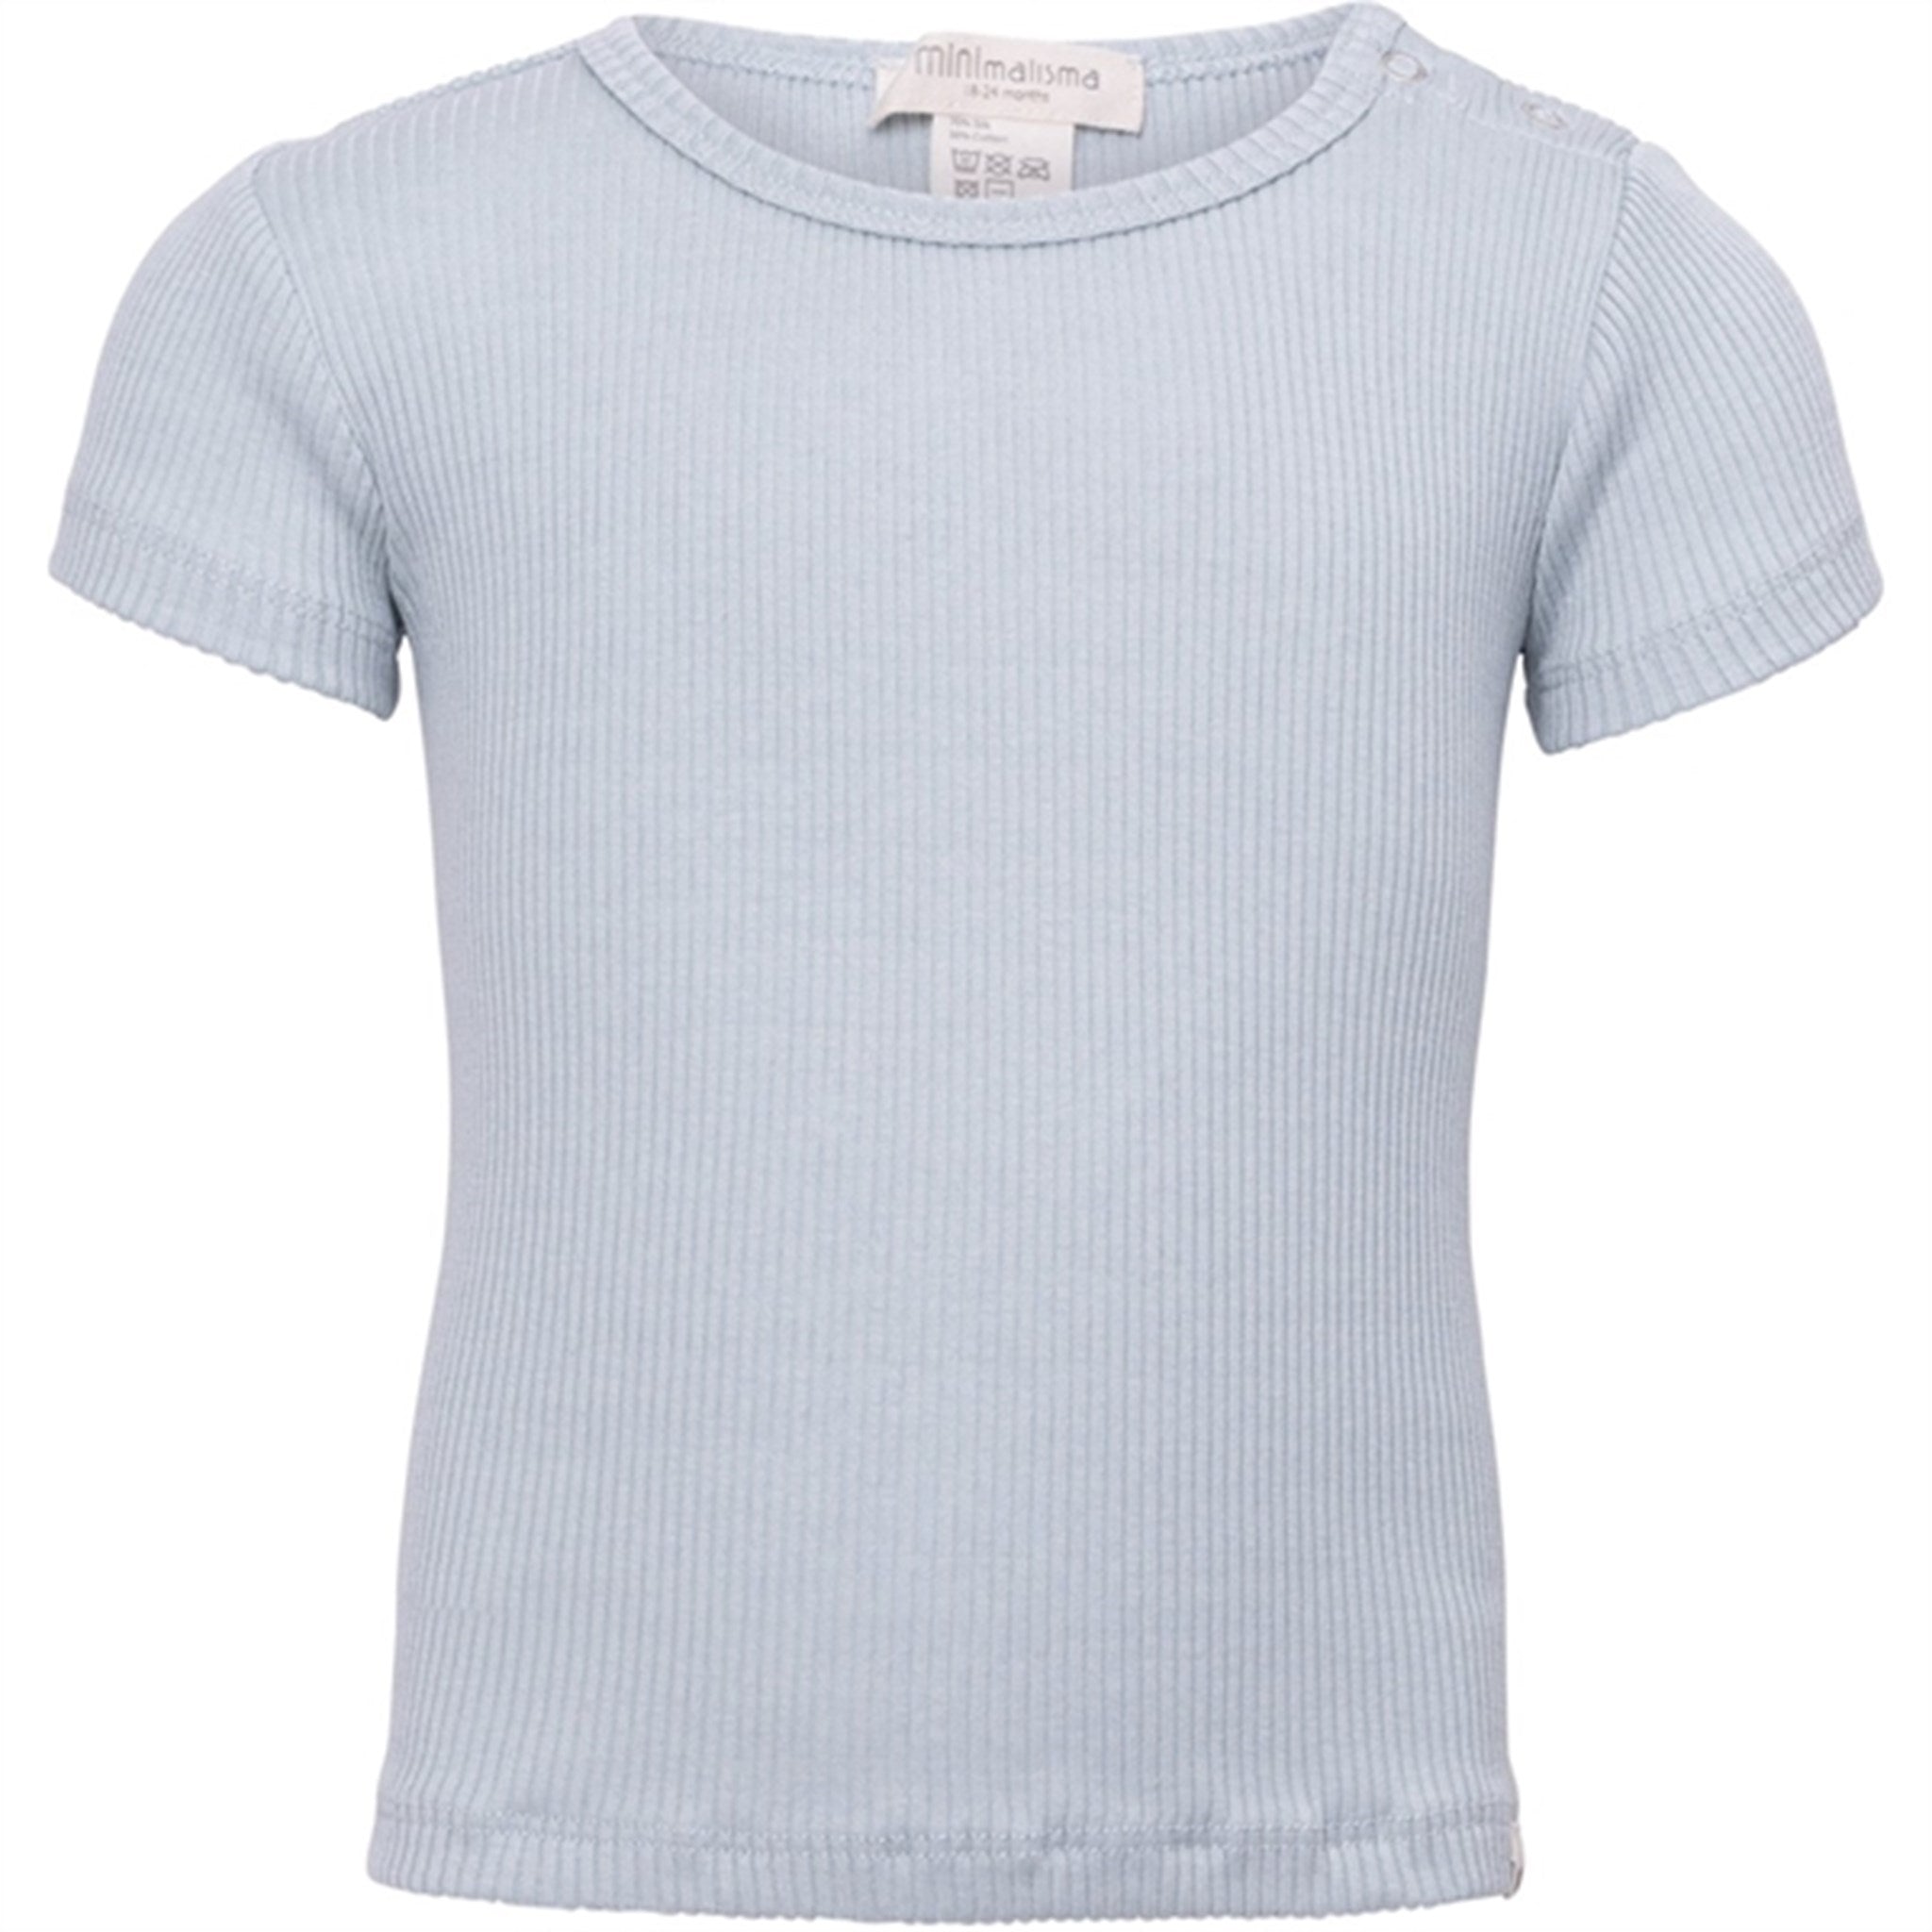 Minimalisma Bimse T-shirt Light Blue Clearwater